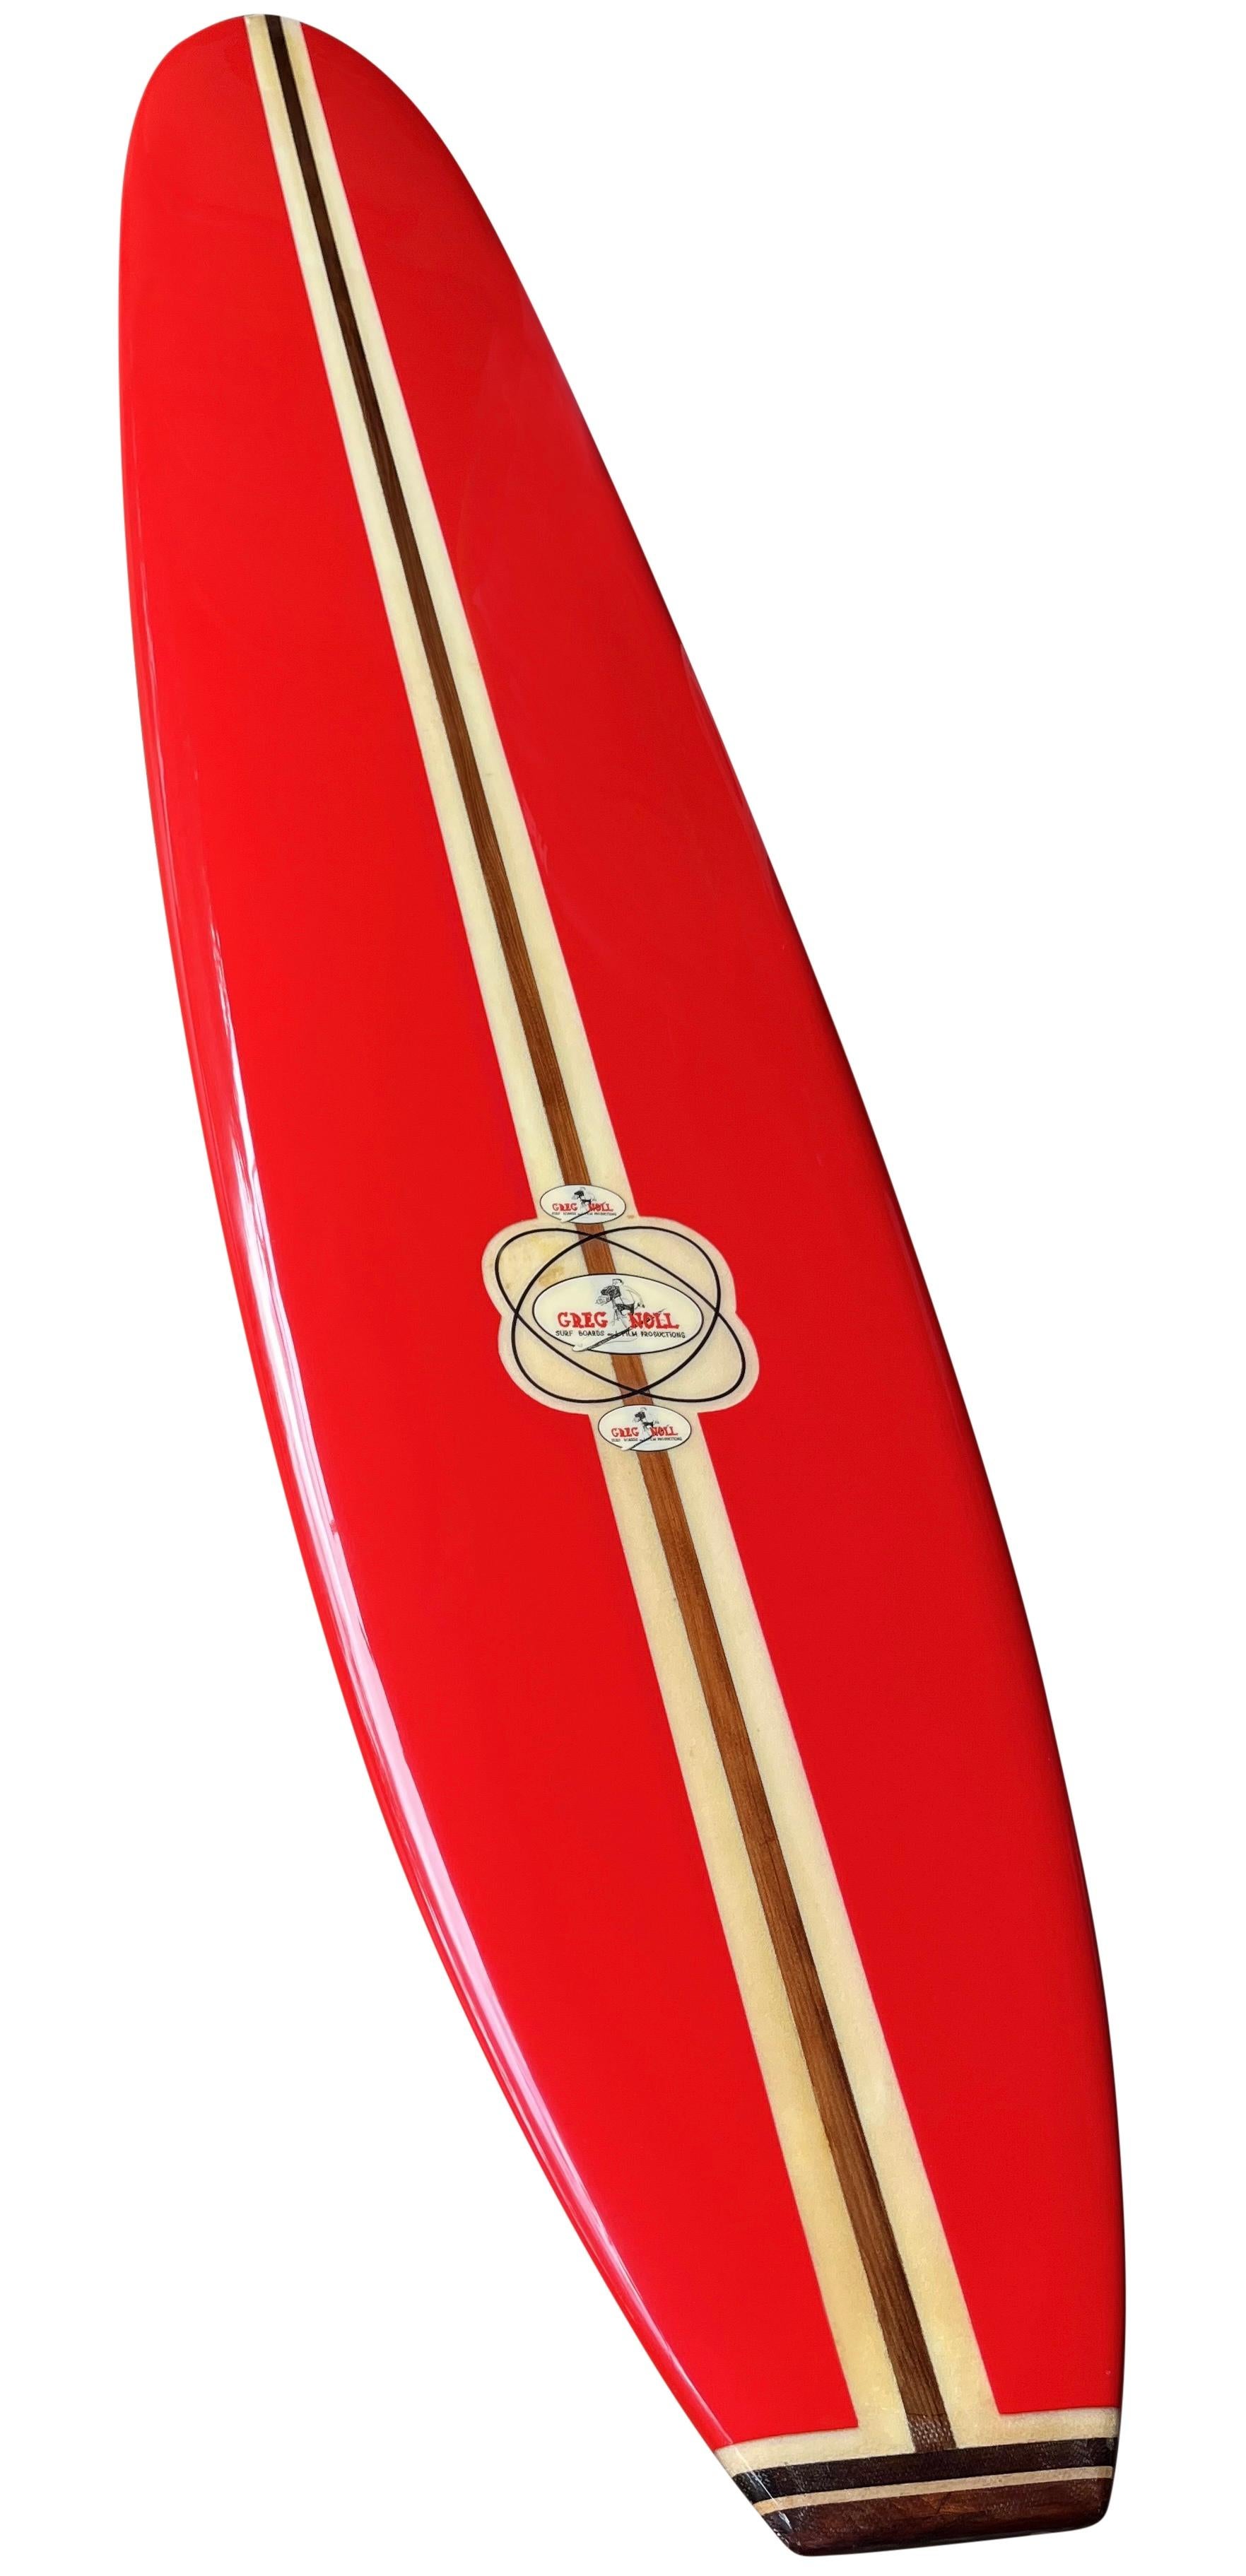 greg noll surfboard for sale